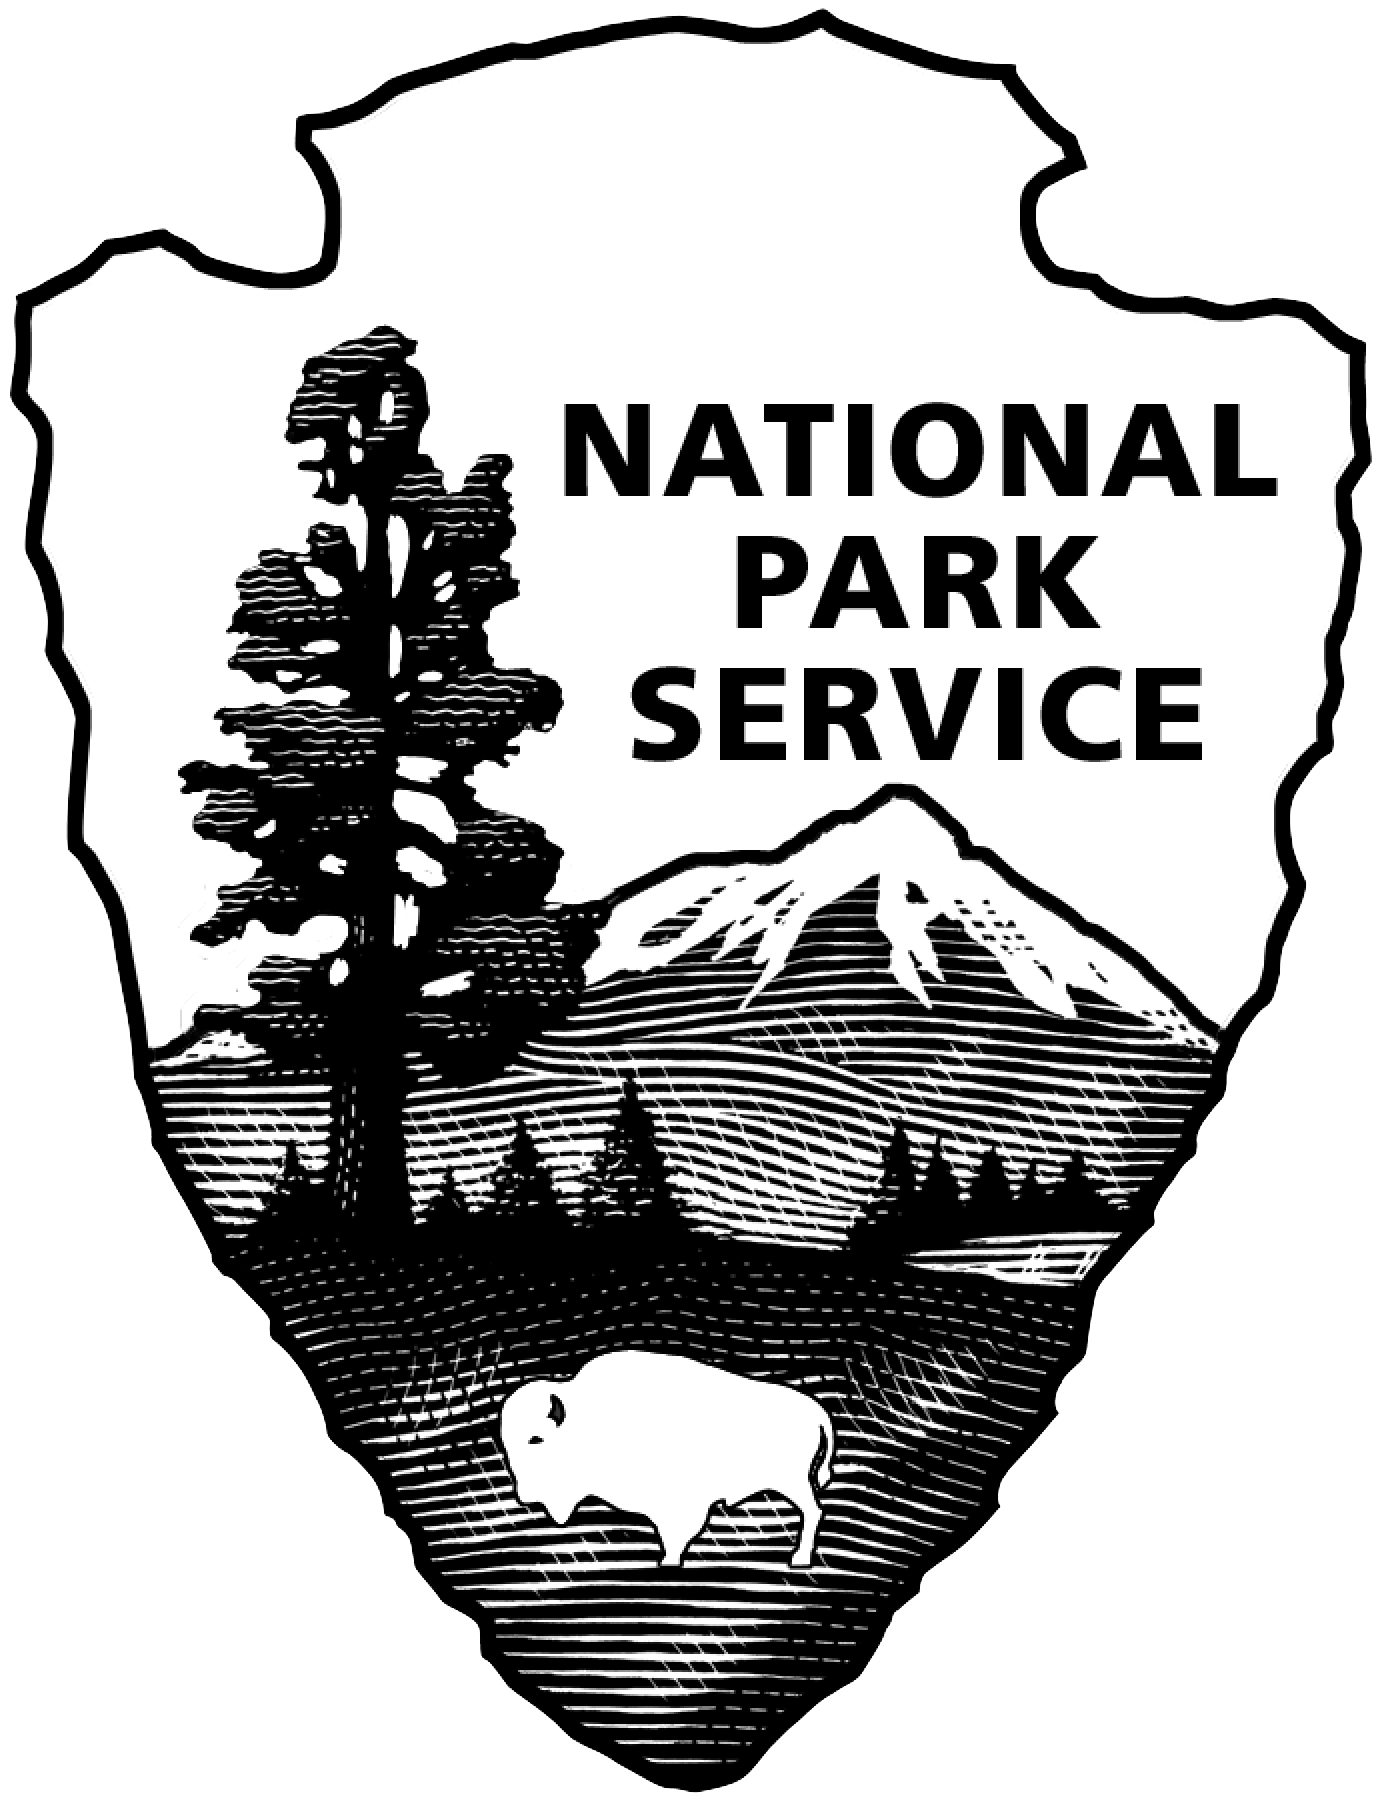 National Park Service Image Hot Girls Wallpaper